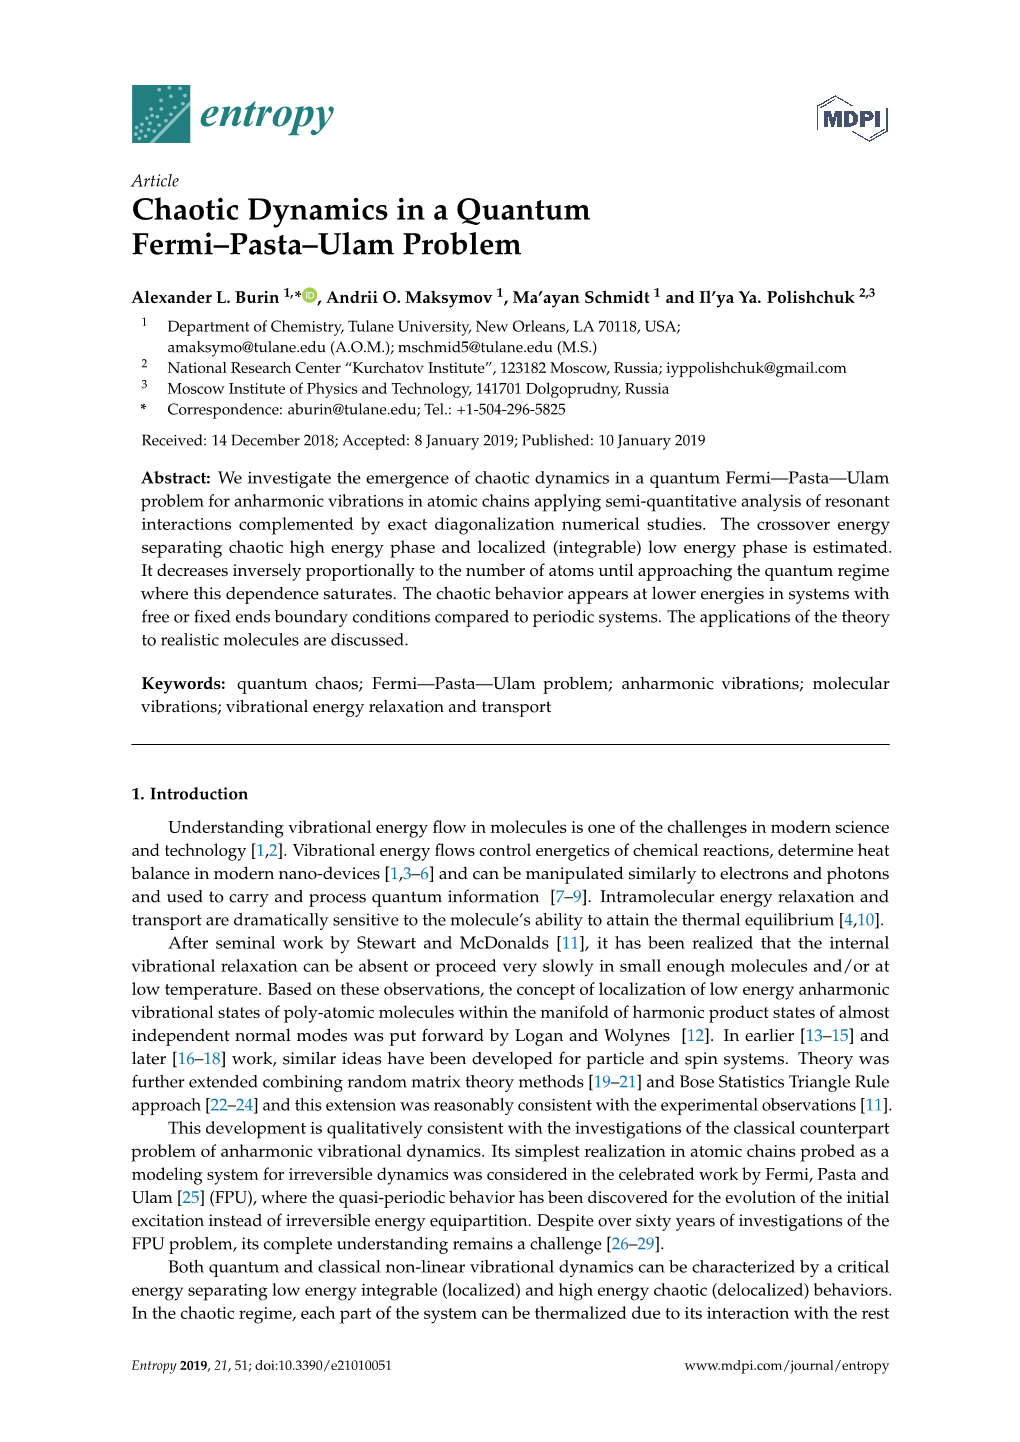 Chaotic Dynamics in a Quantum Fermi–Pasta–Ulam Problem